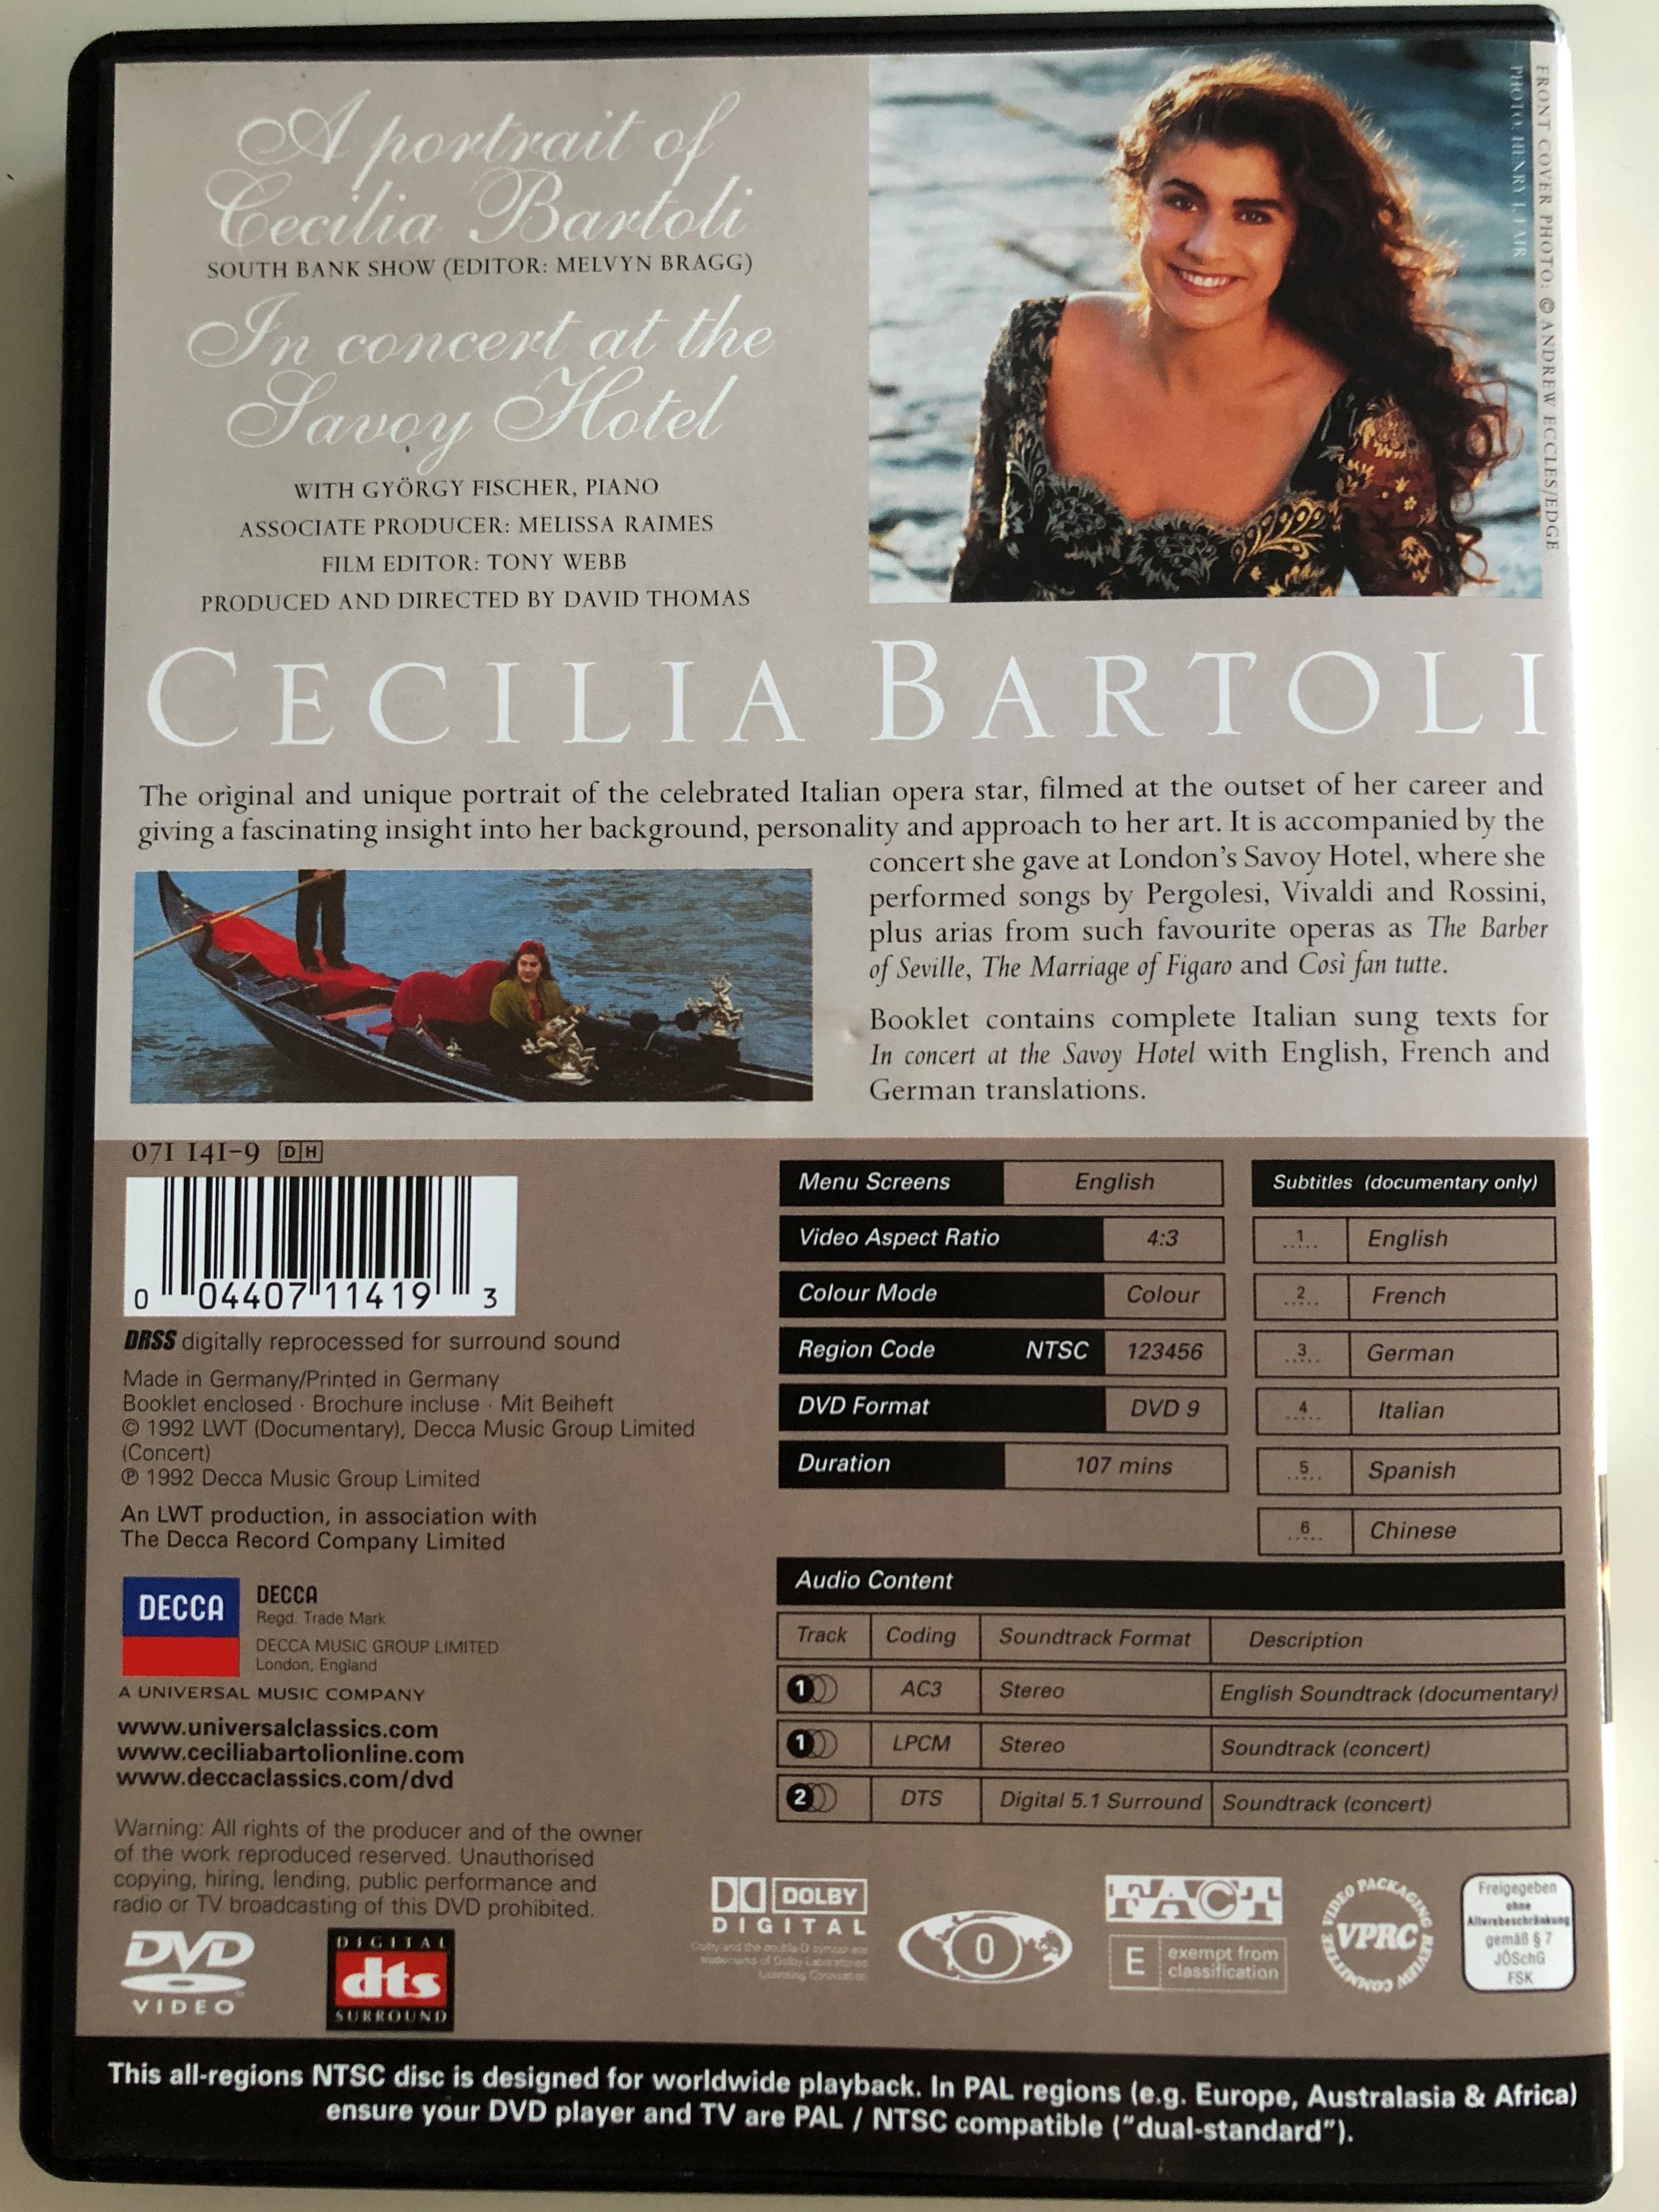 Cecilia Bartoli - A Portrait DVD 1992 The original documentary film 1.JPG